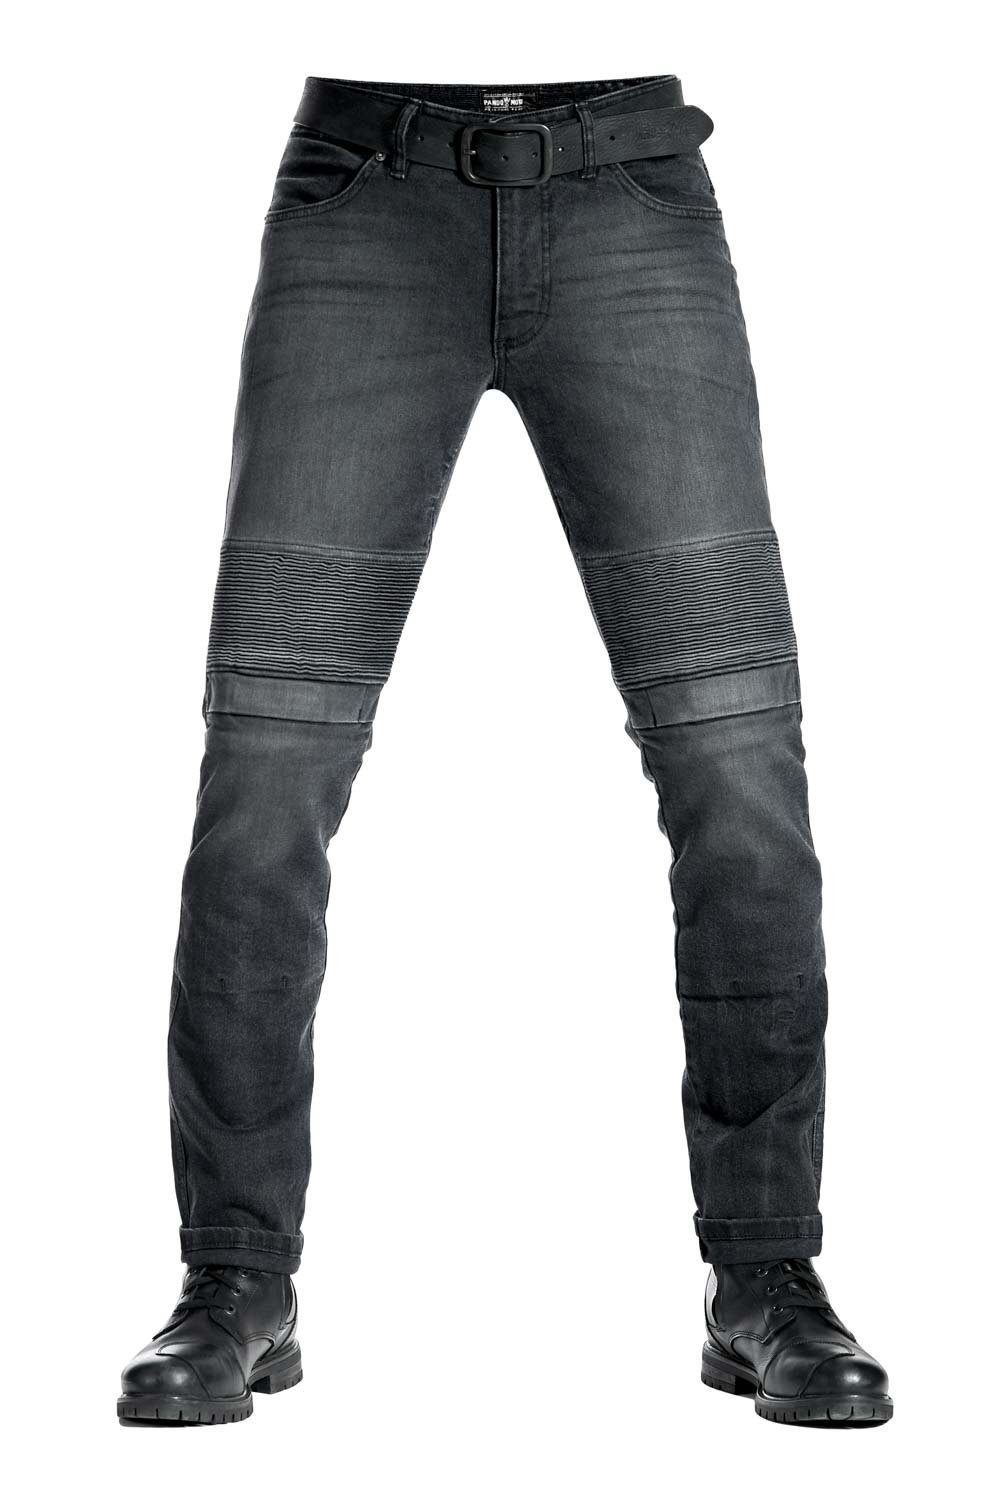 next black jeans slim fit